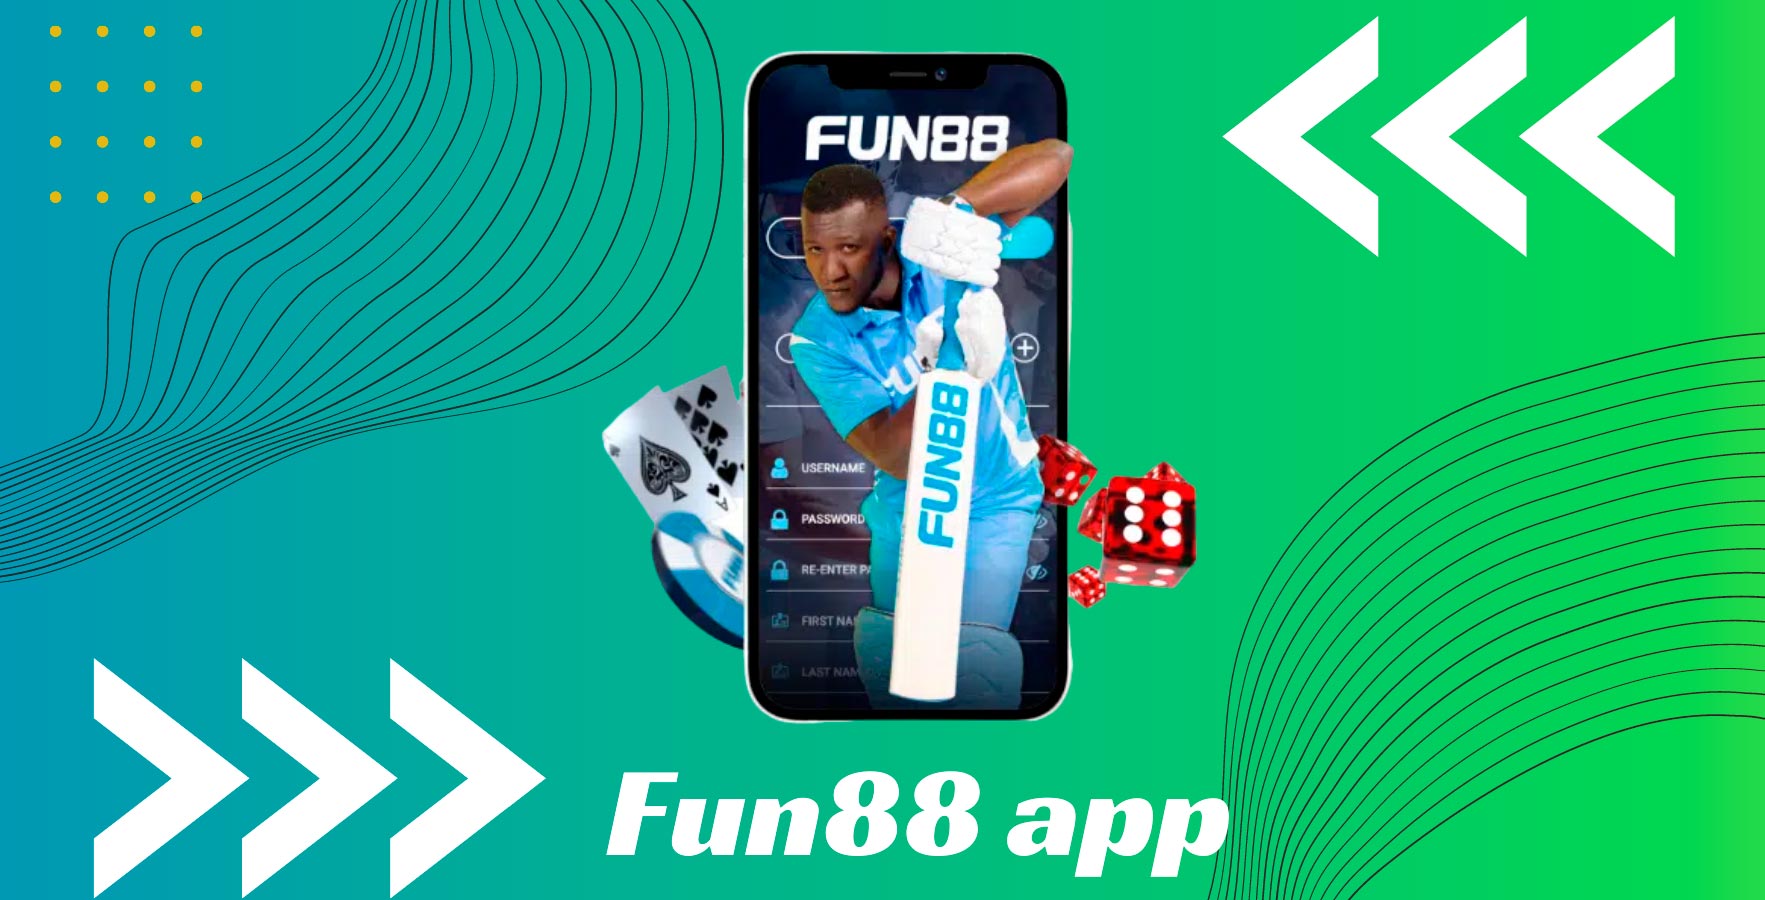 Fun88 app India